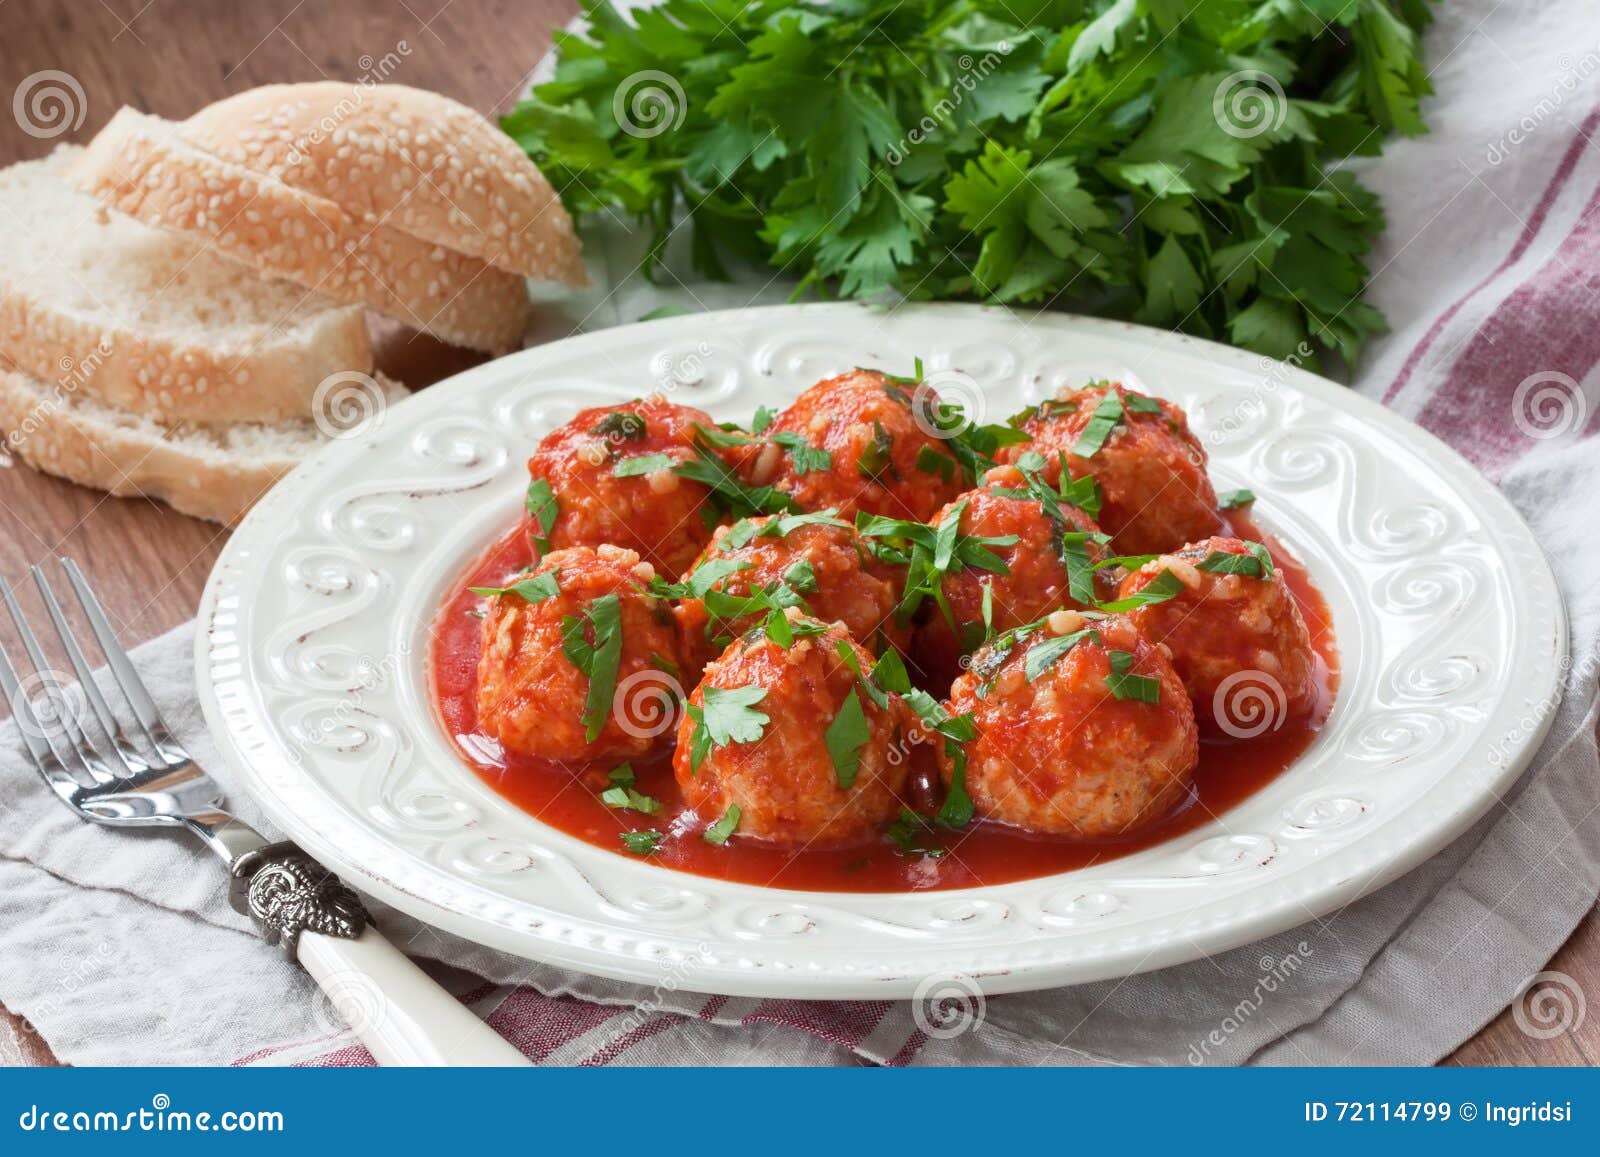 meatballs with tomato sauce